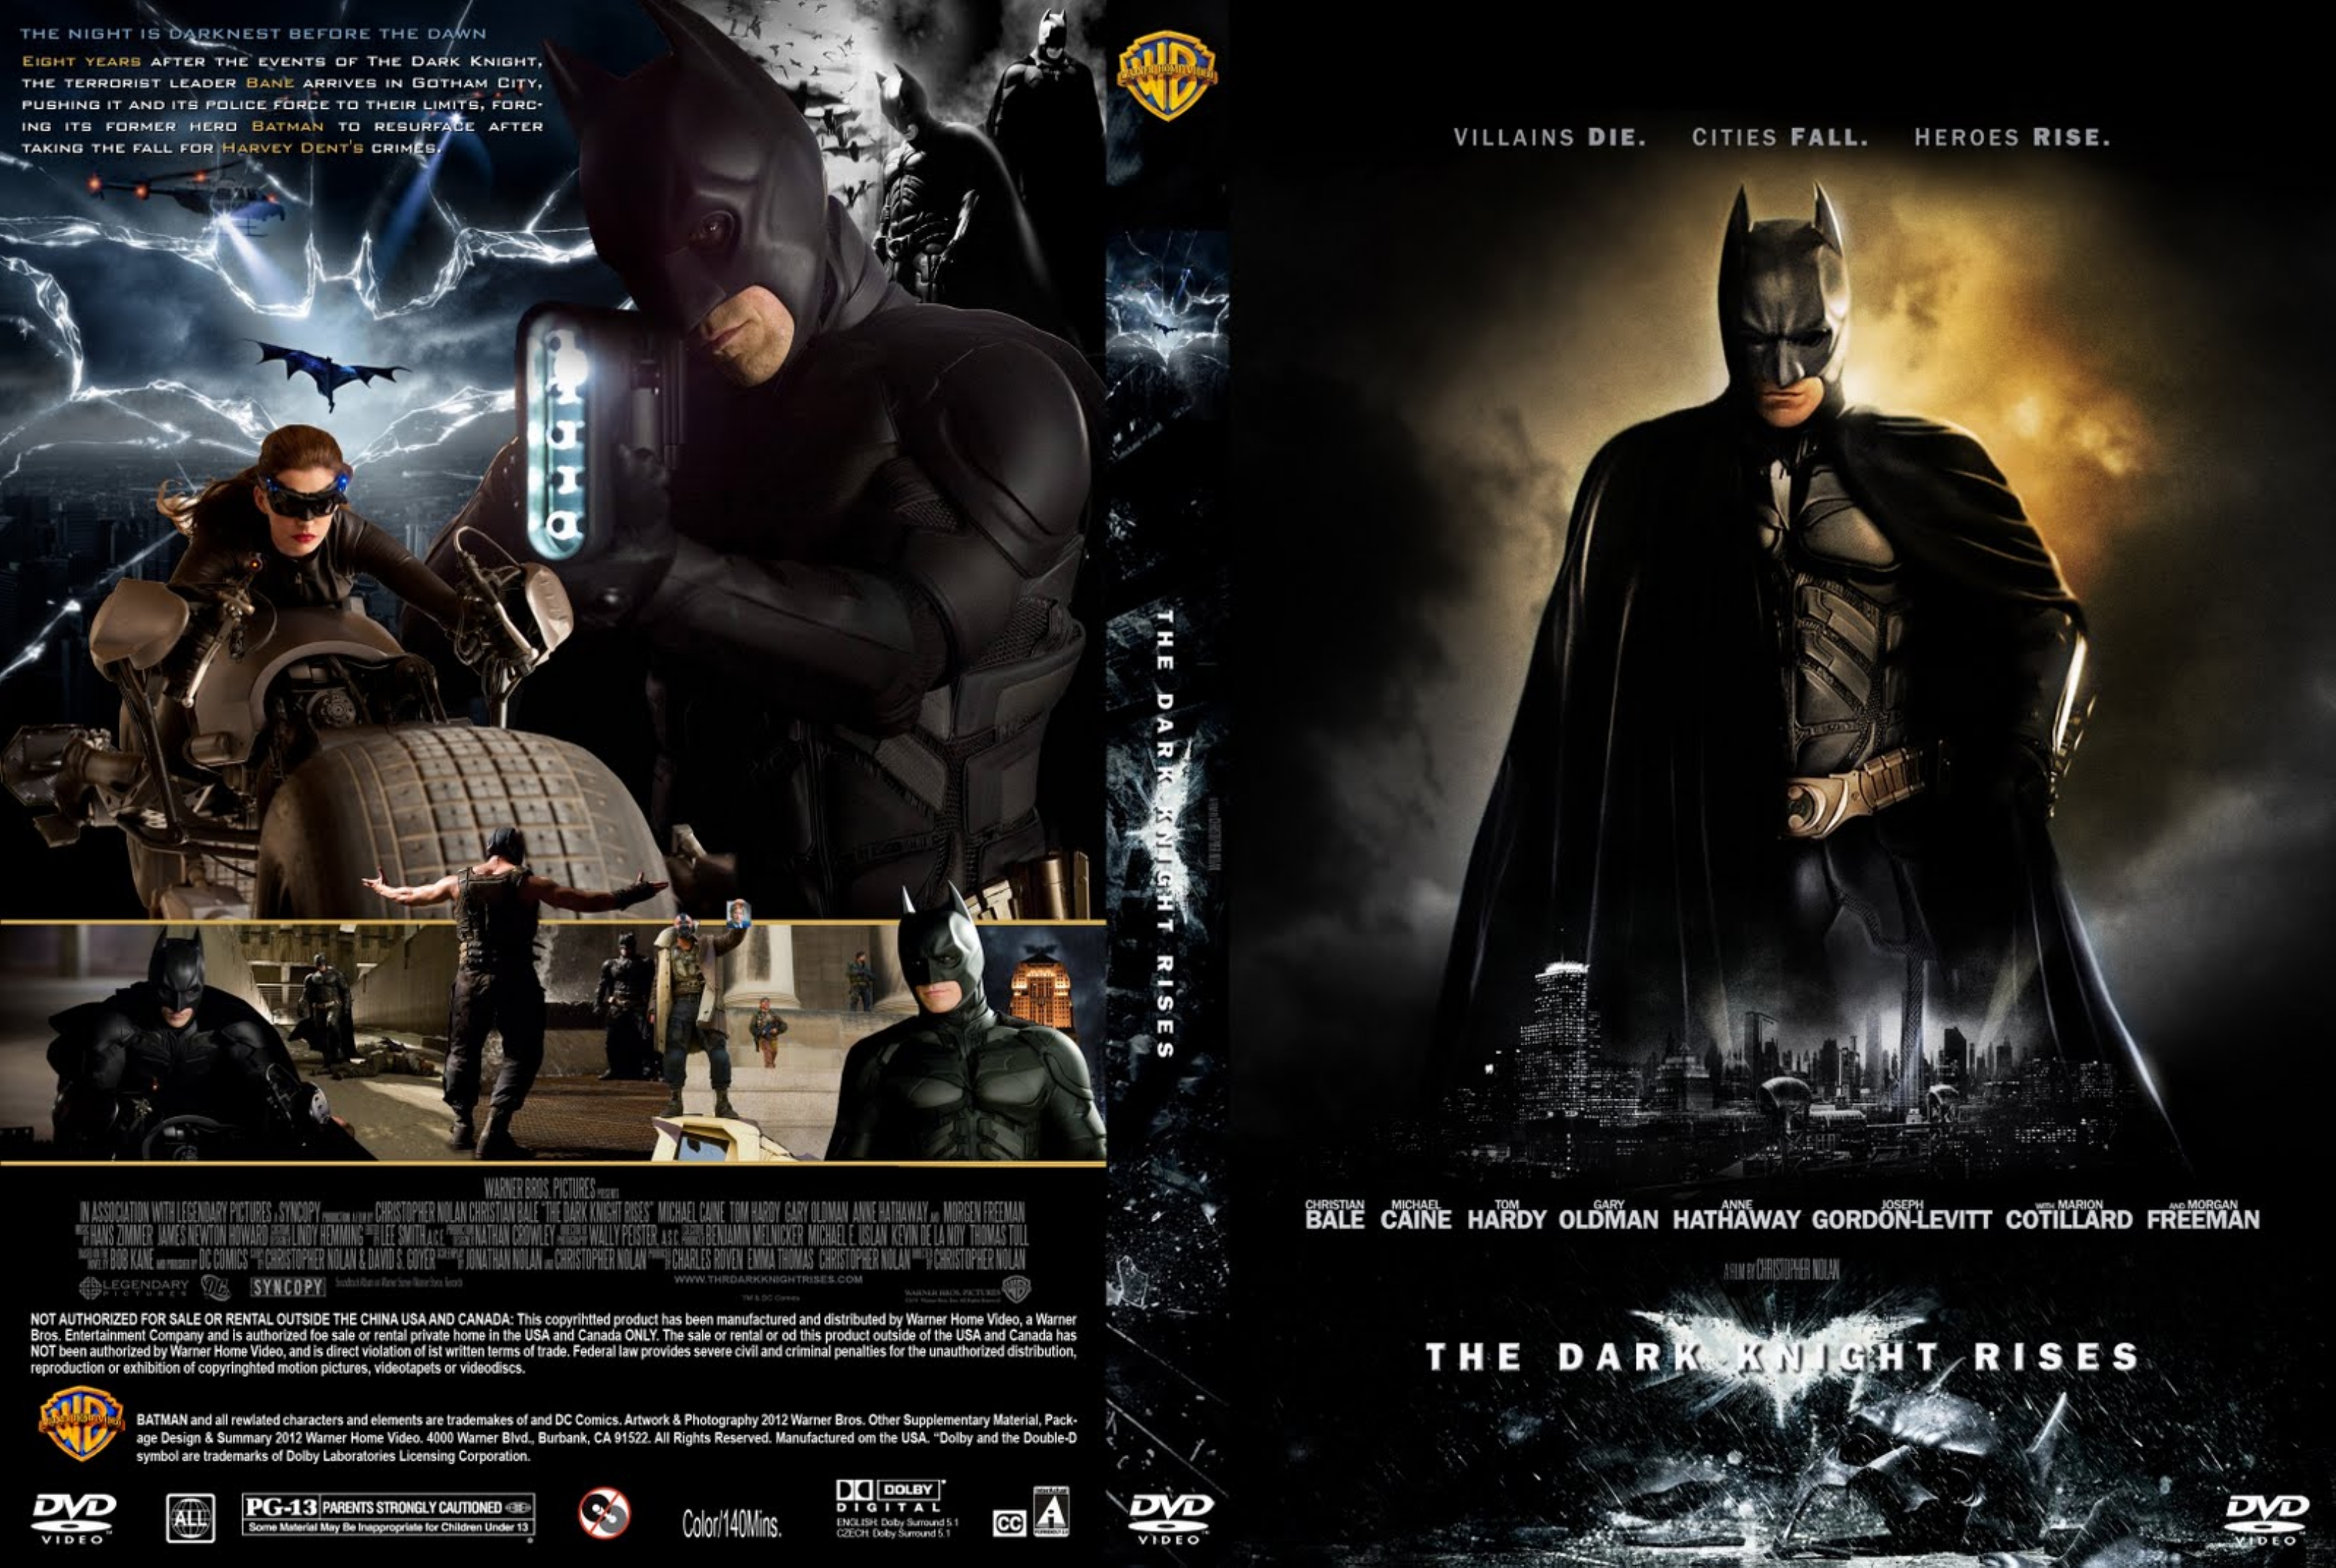 the dark knight rises dvd cover